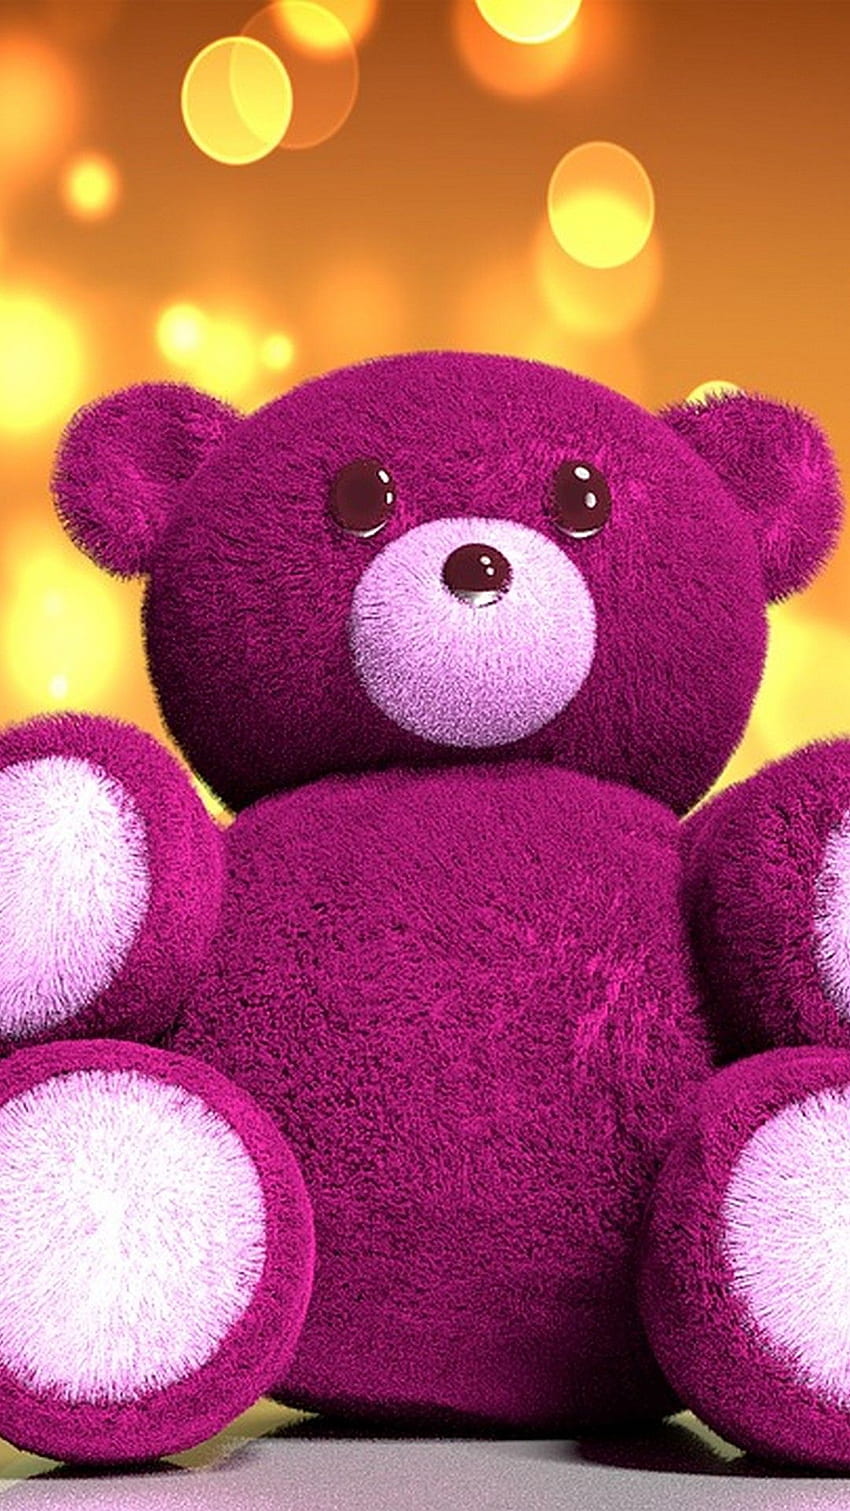 Little Teddy Bear (5 Pack) – Newborn Studio Props